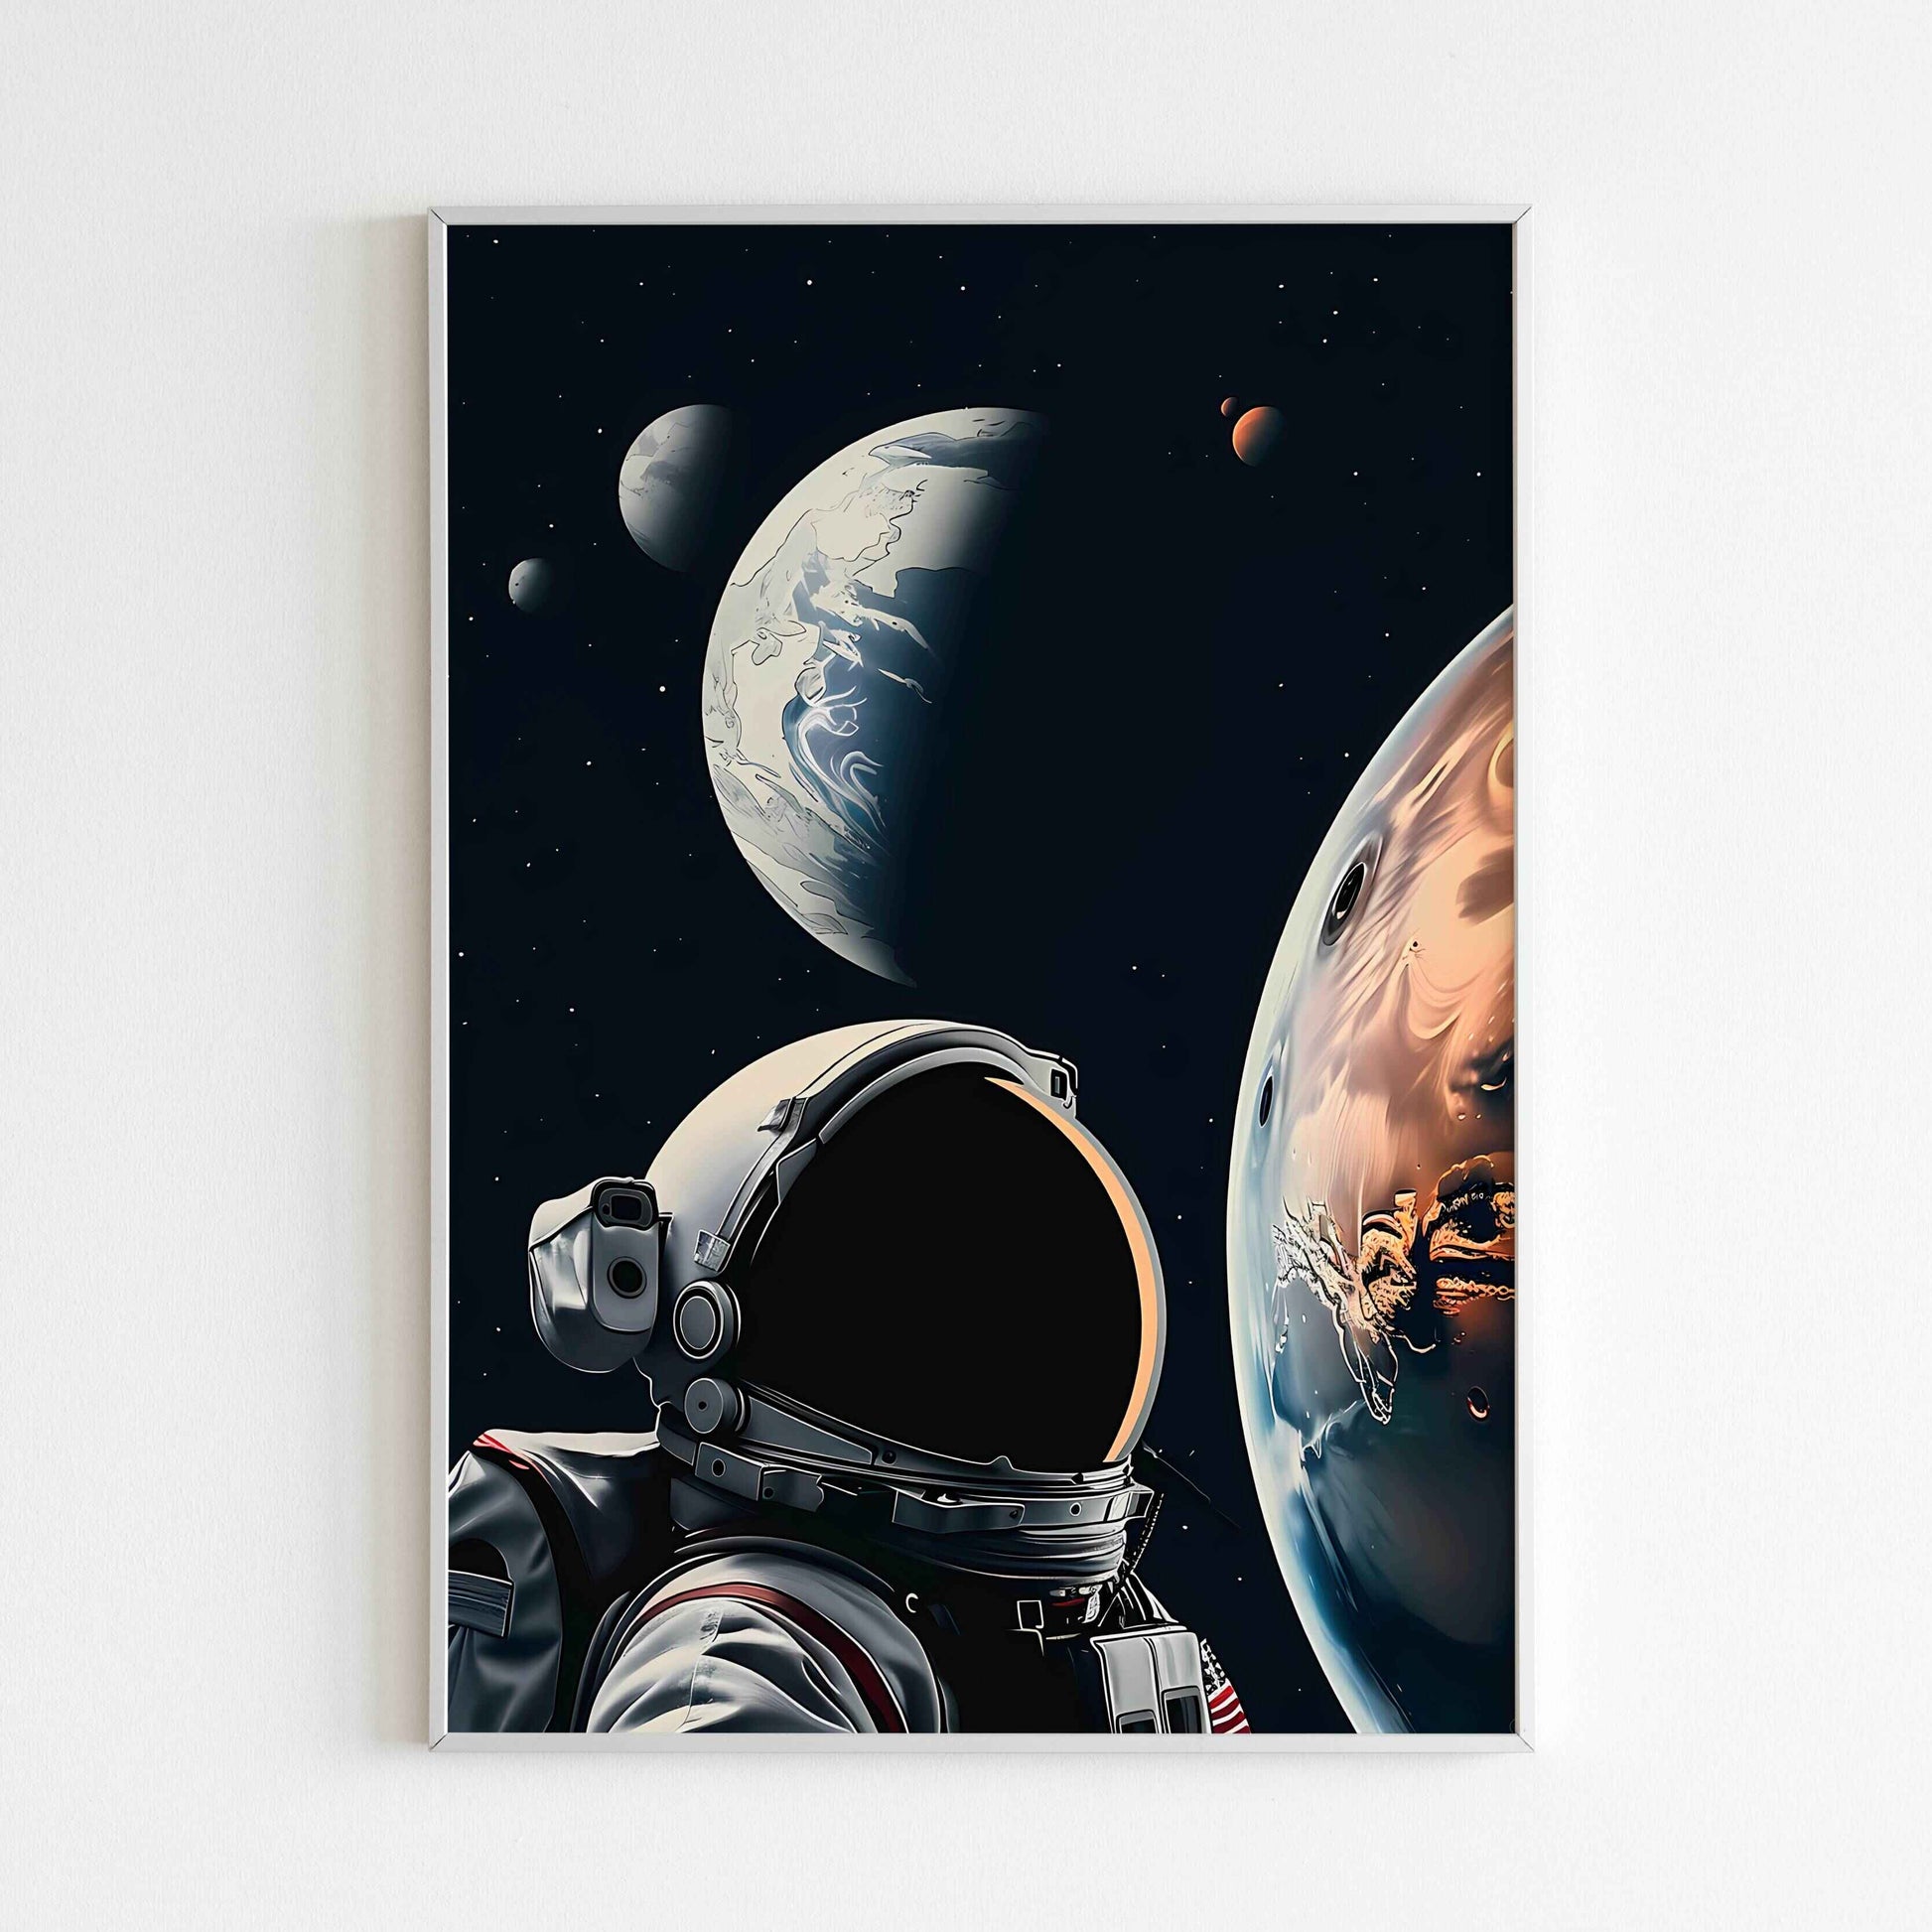 Downloadable photo art print of an astronaut.